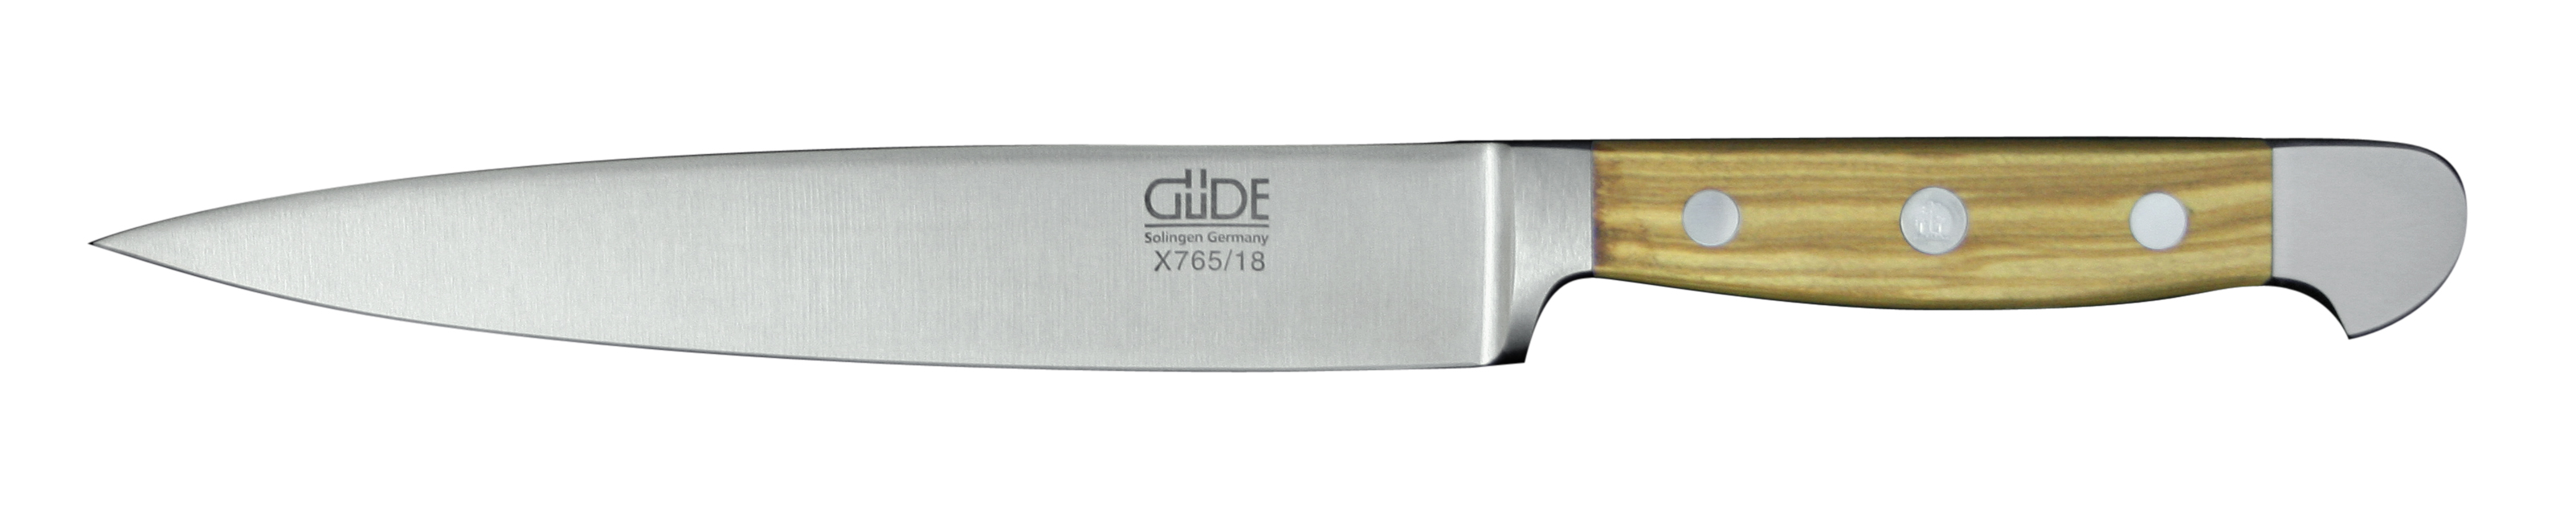 Güde Alpha Olive Filiermesser 18 cm - CVM-Messerstahl mit Griffschalen aus Olivenholz